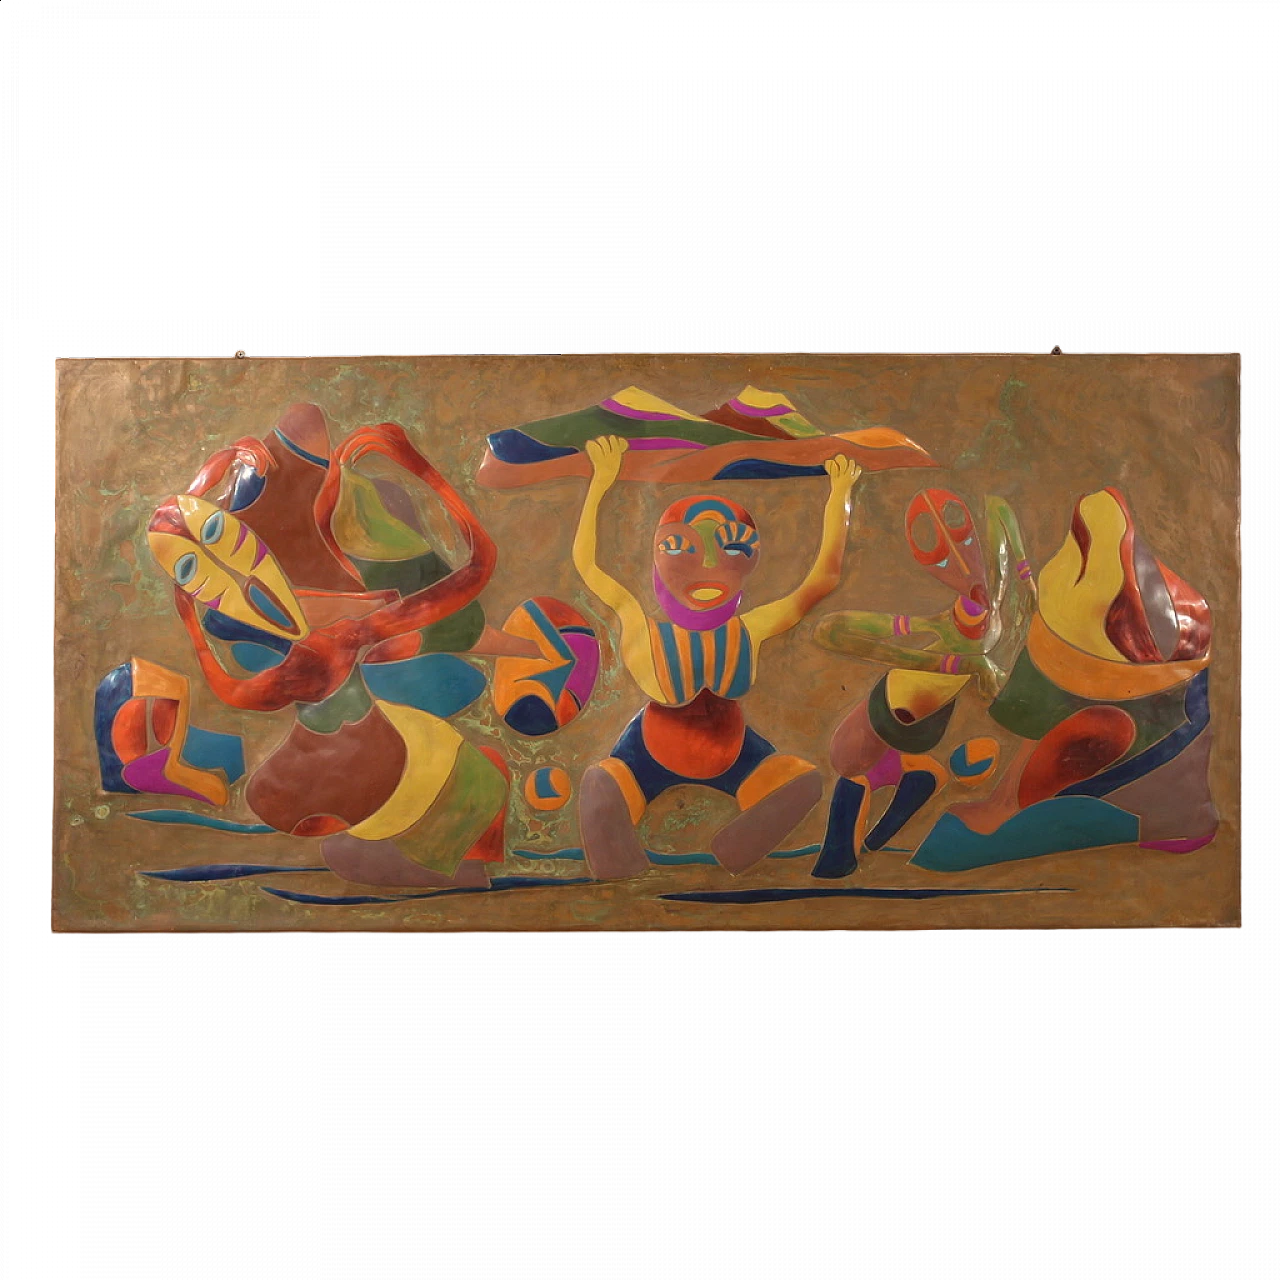 Pannello in rame sbalzato, cesellato e dipinto, 1981 16